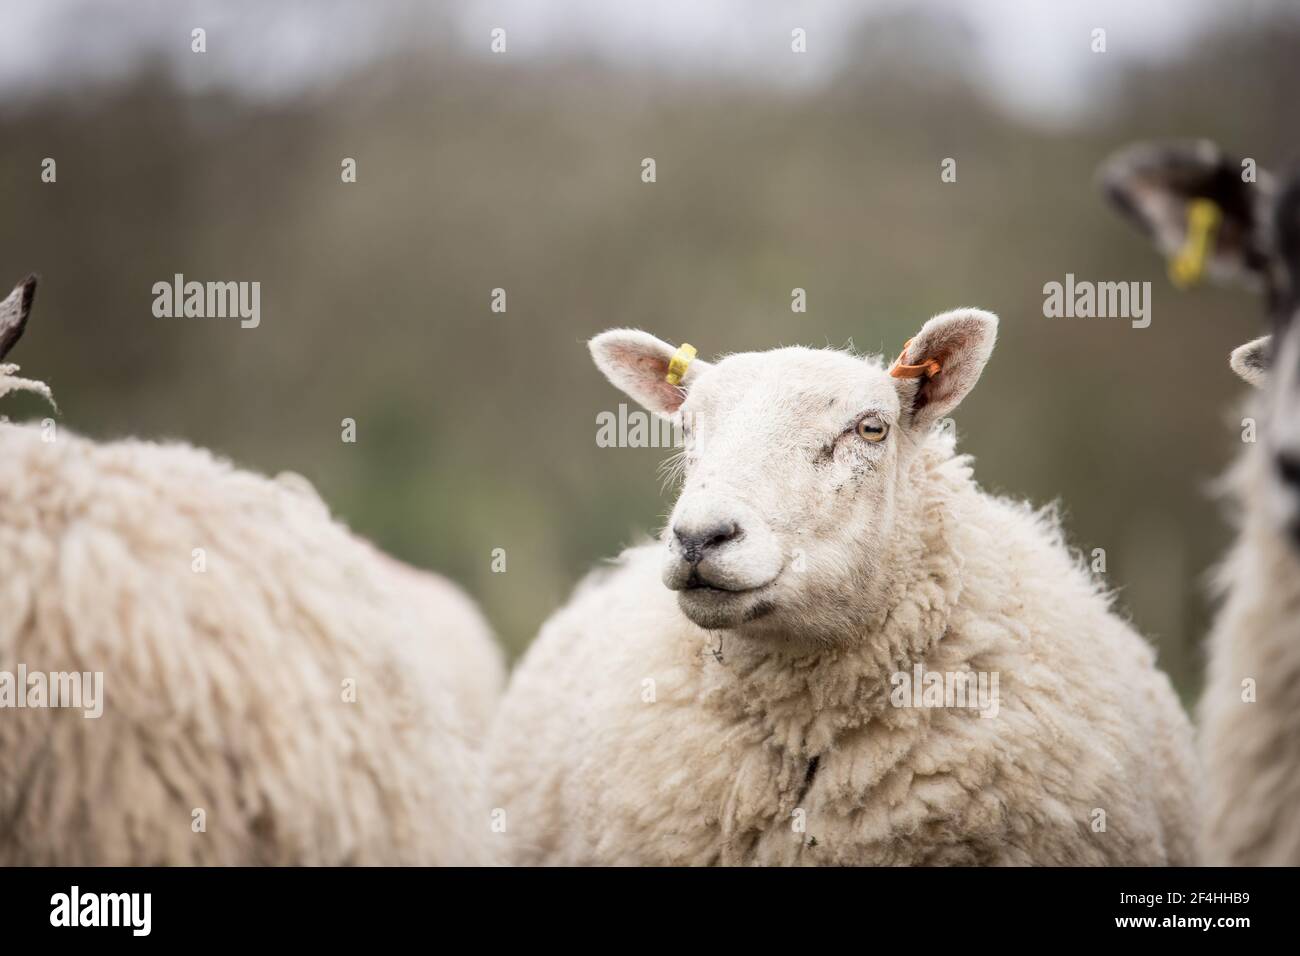 single white woolly sheep ewe British wool farming livestock Stock Photo